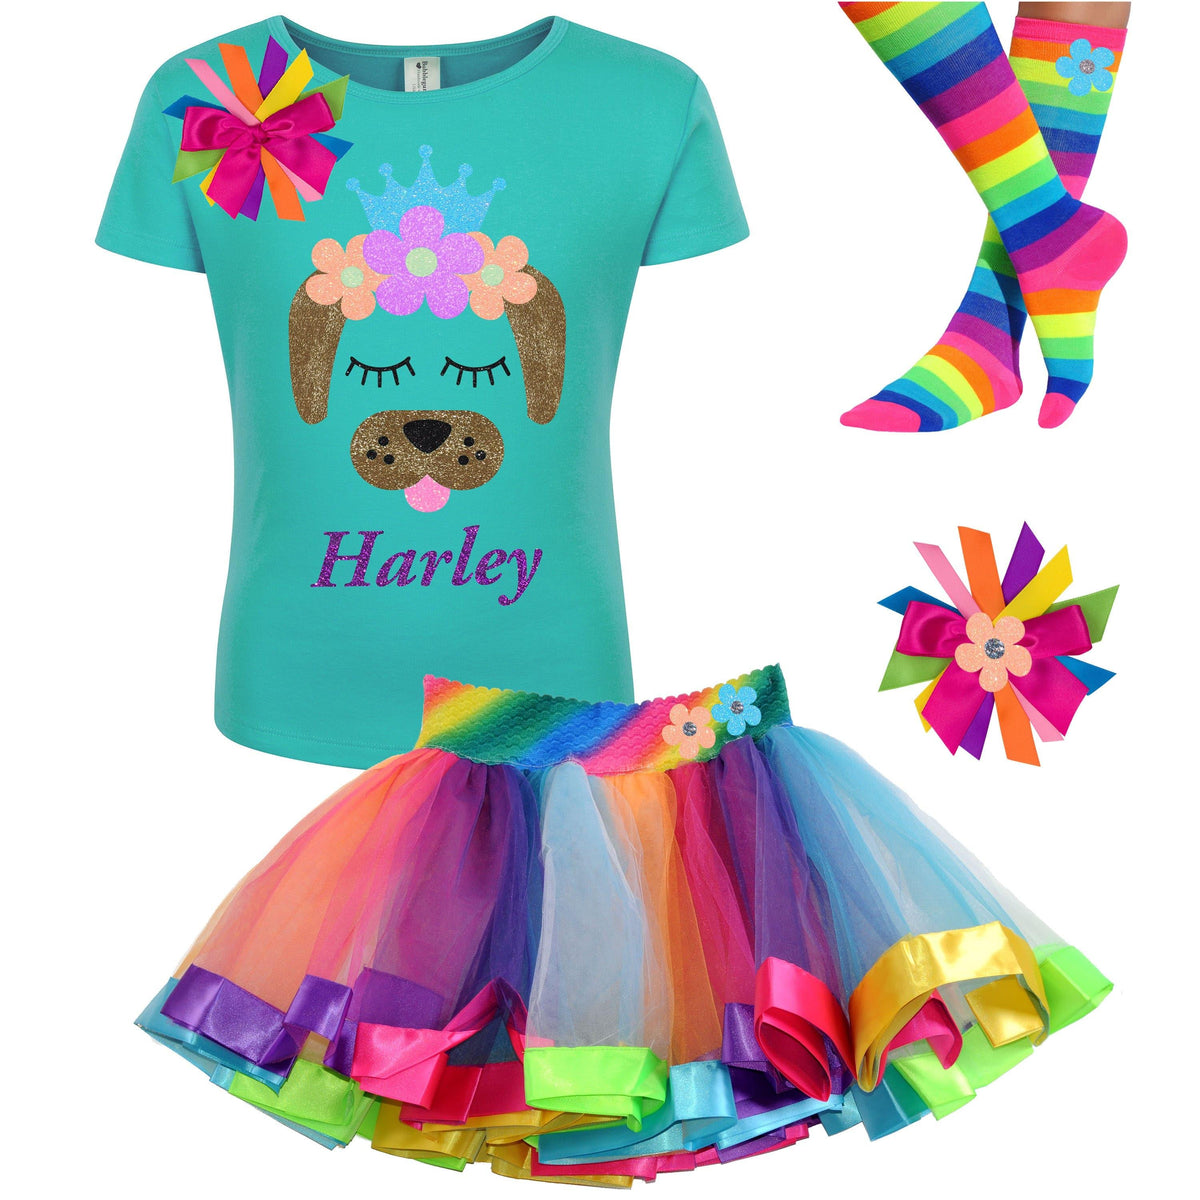 Brown Puppy Dog Outfit - Neon Flowers - Outfit - Bubblegum Divas Store